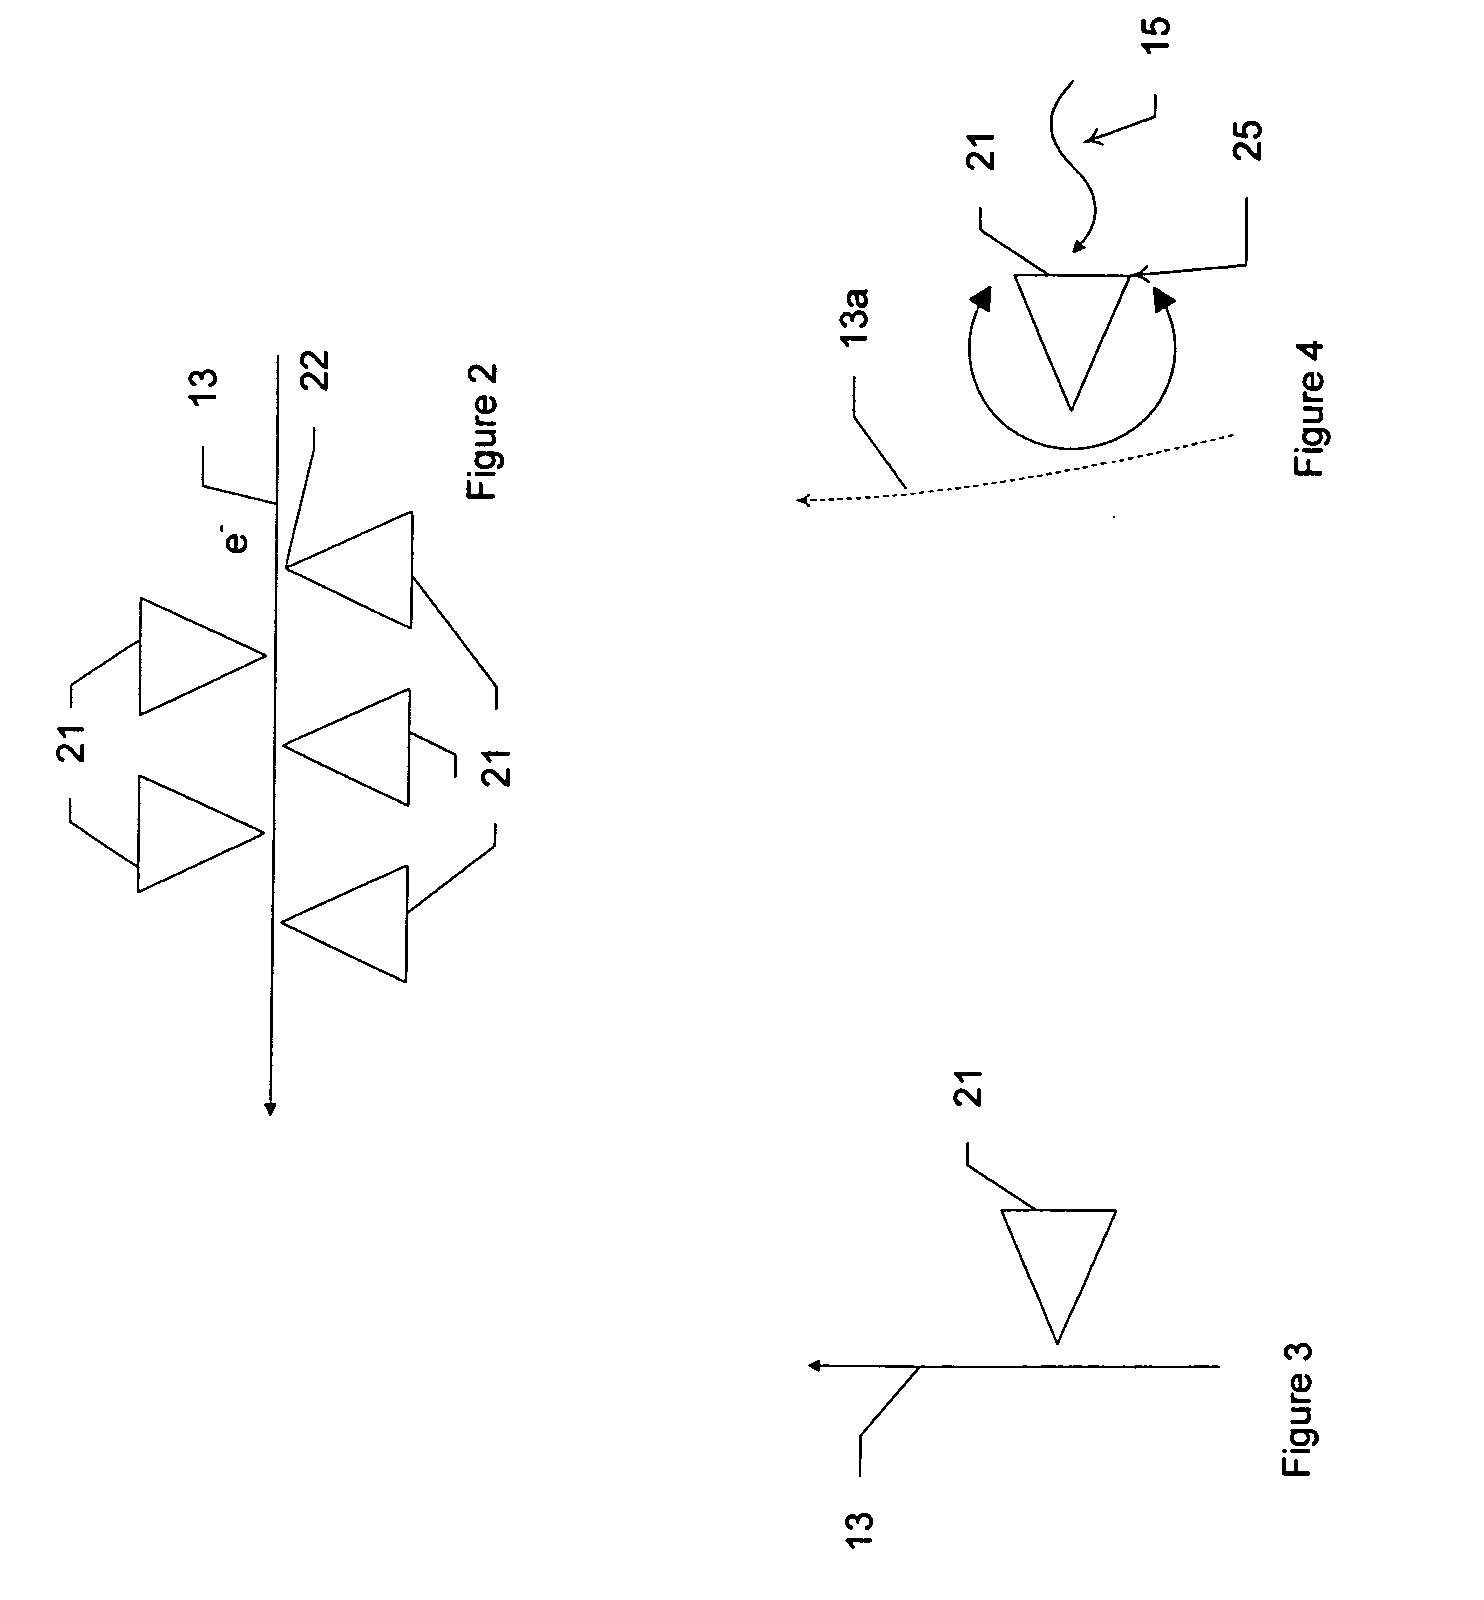 Heterodyne receiver array using resonant structures